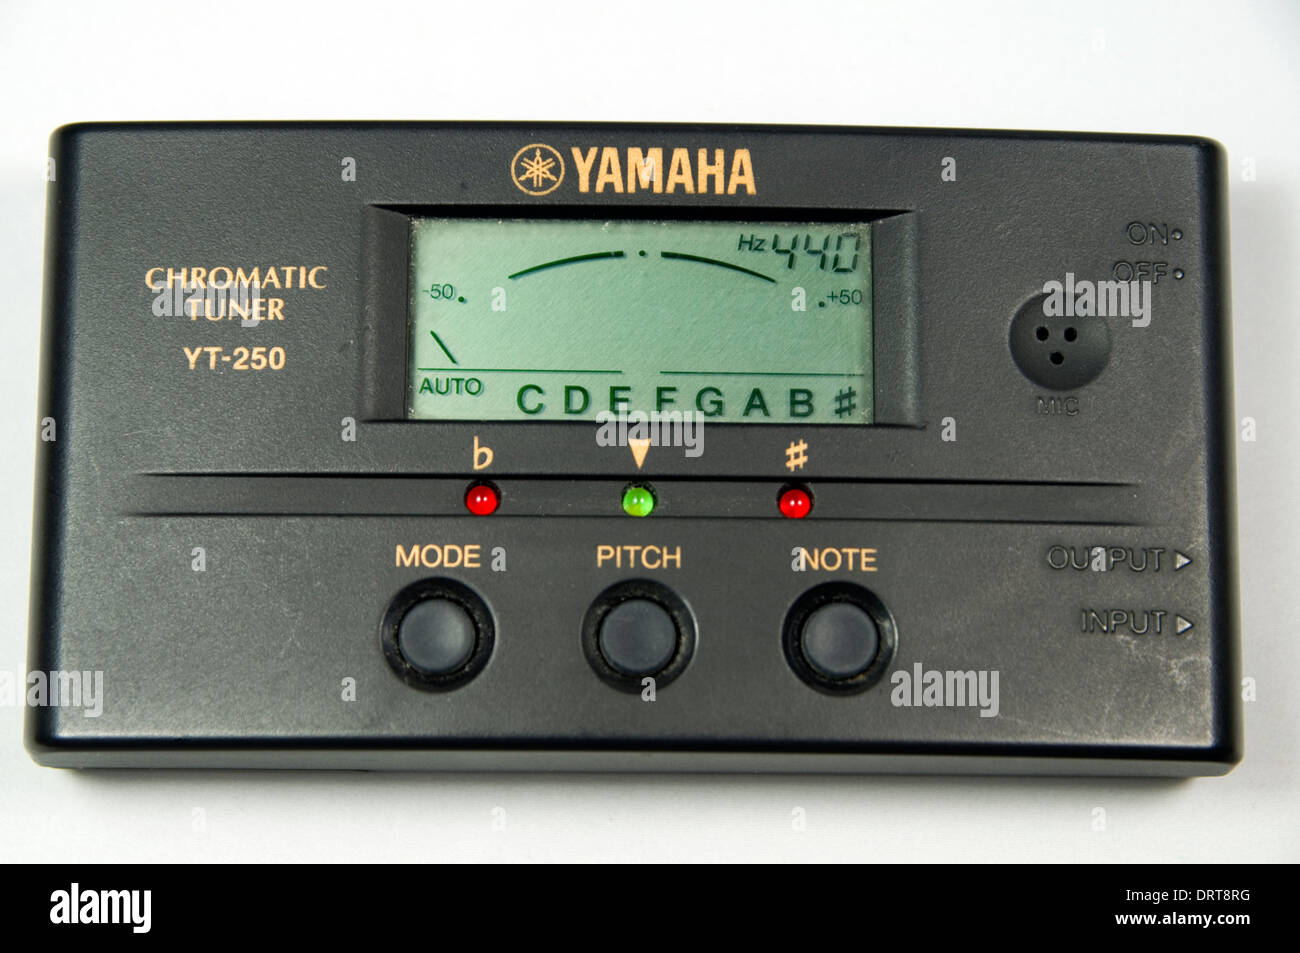 Electrónicos Yamaha afinador cromático para guitarra... Foto de stock